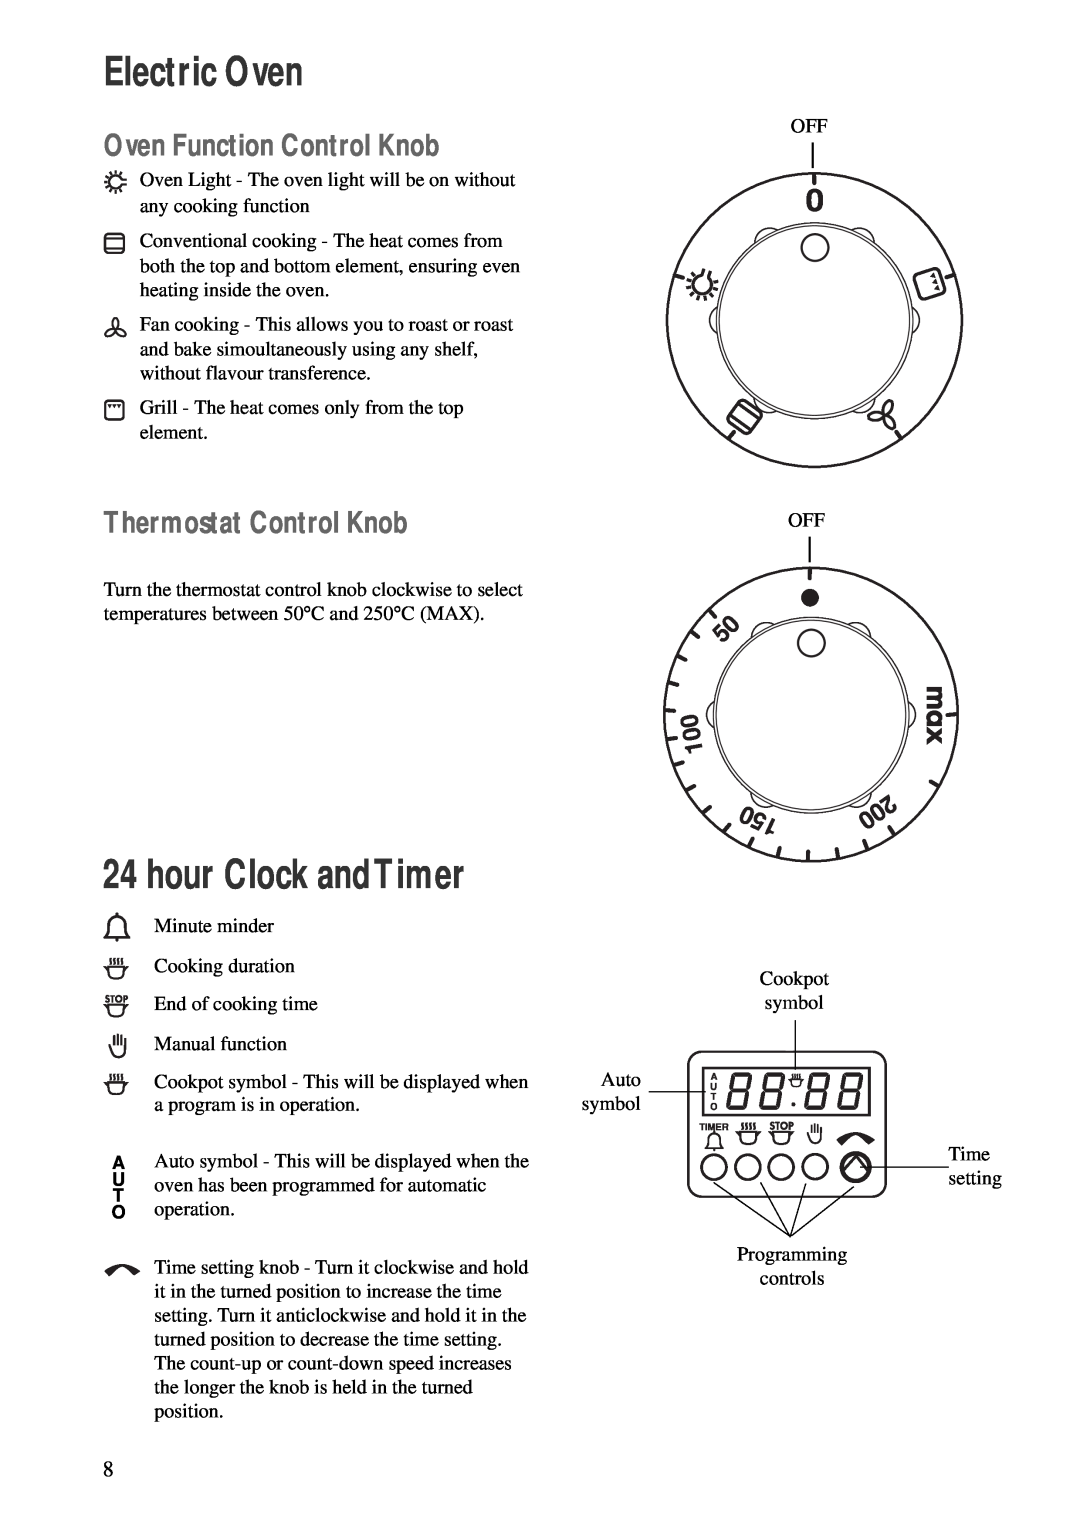 Zanussi ZCE 620 X Electric Oven, hour Clock andTimer, Oven Function Control Knob, Thermostat Control Knob, Auto, symbol 